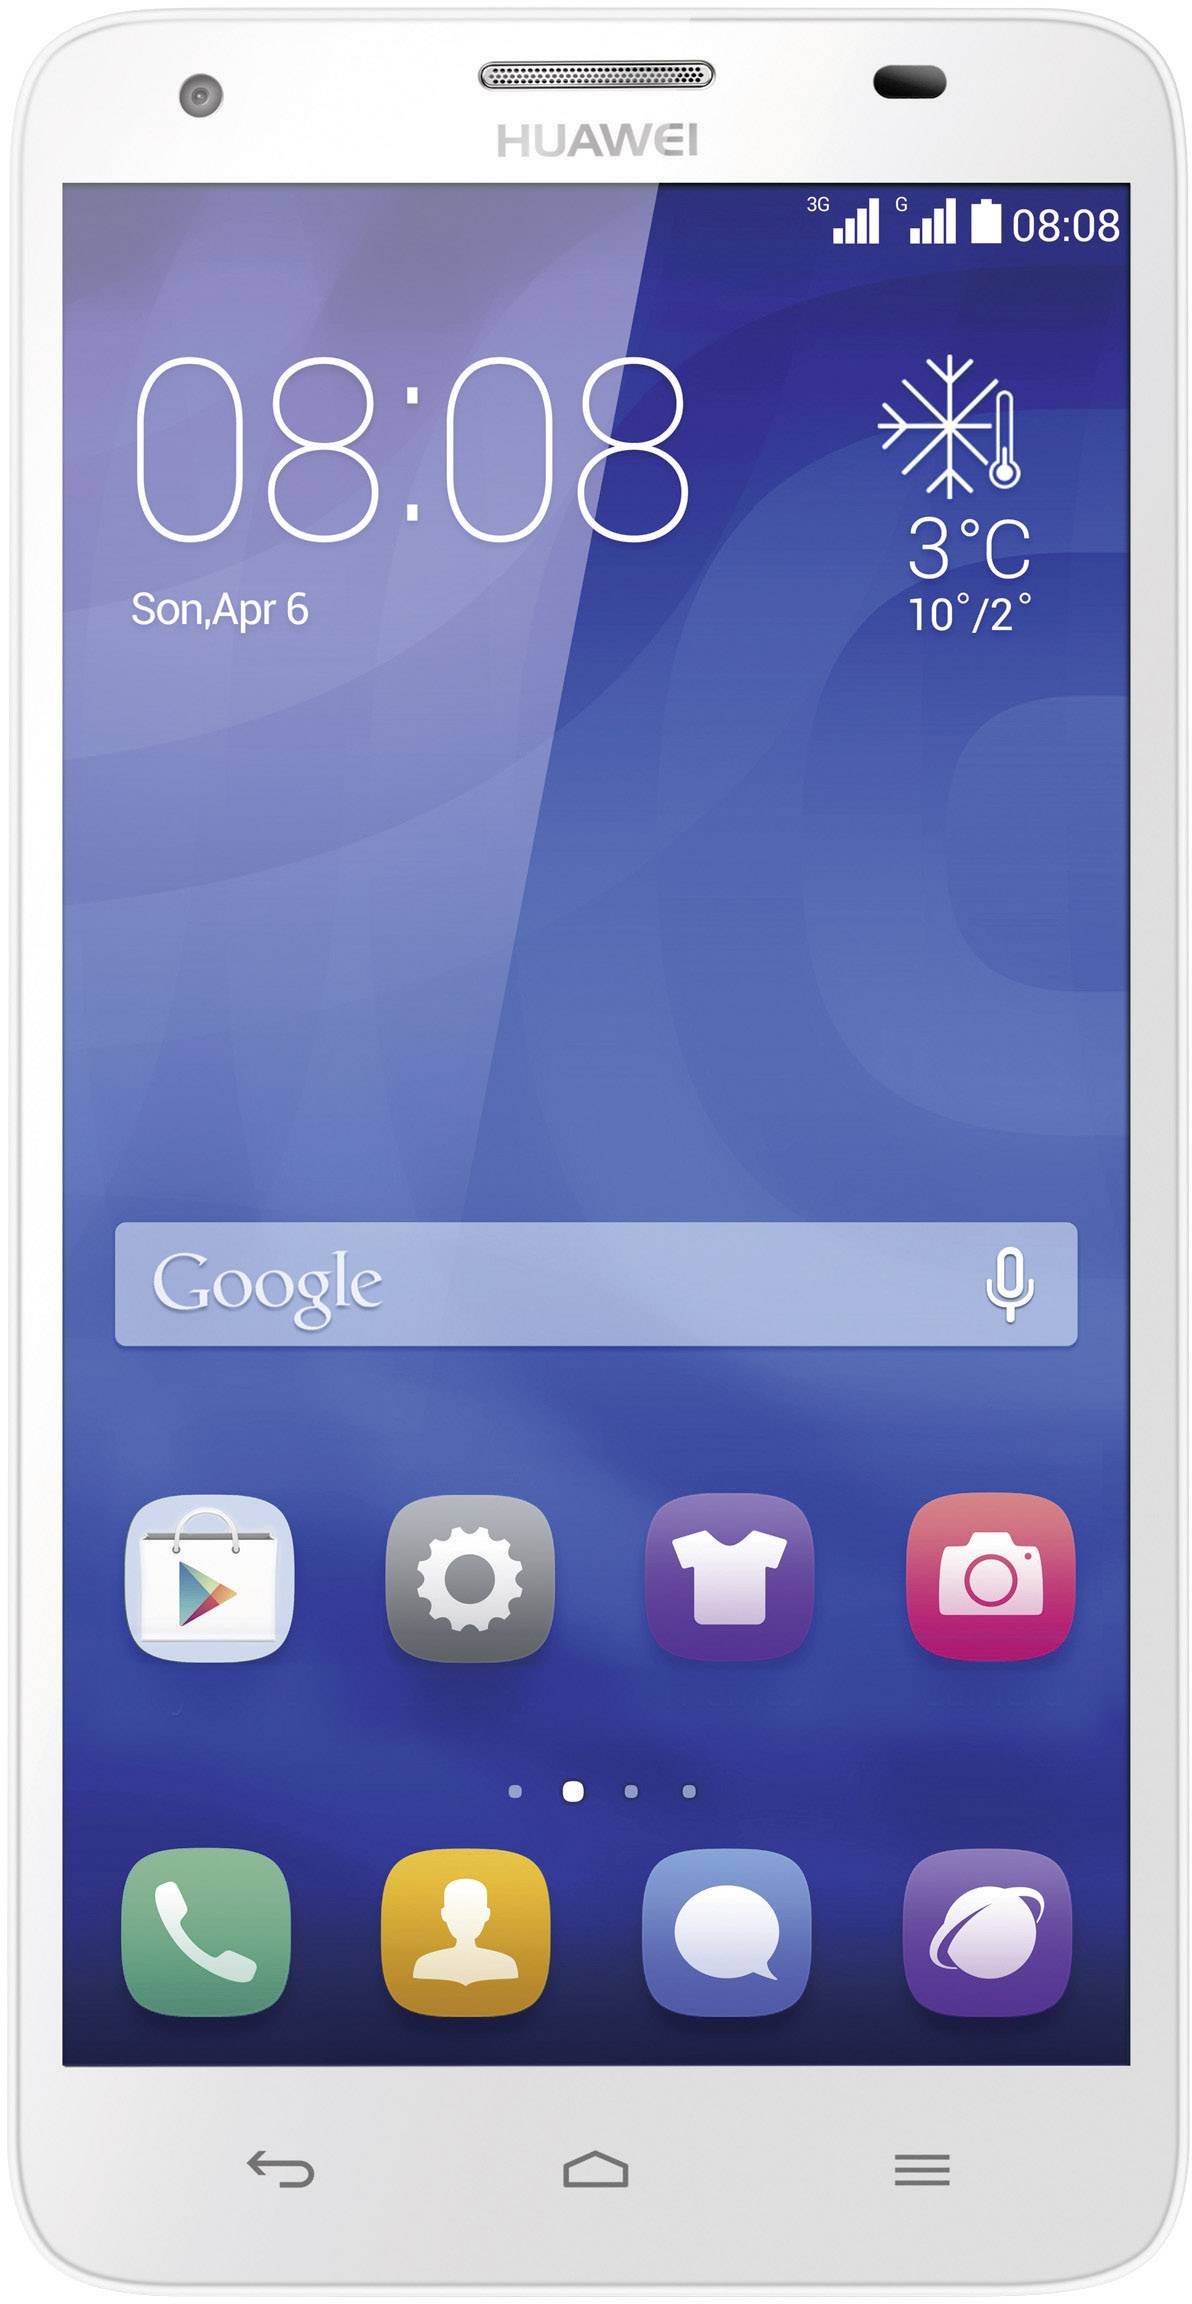 Vader fage Geheim Tanzania Huawei Ascend G750 Smartphone 8 GB 5.5 inch (14 cm) Dual SIM Android™ 4.2  White | Conrad.com